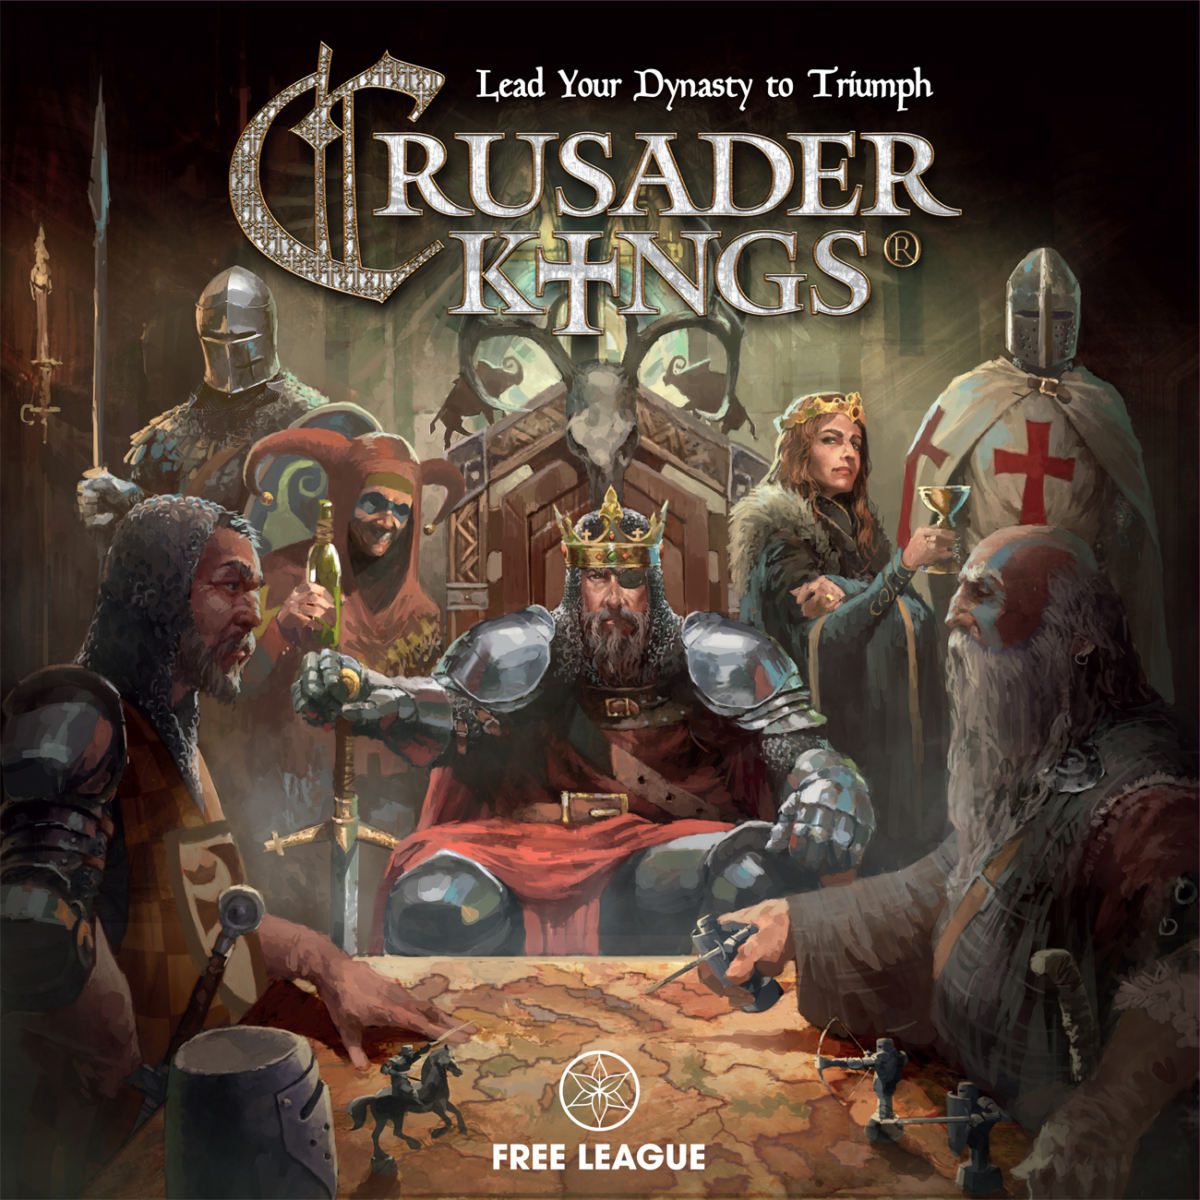 Crusader Kings the boardgame